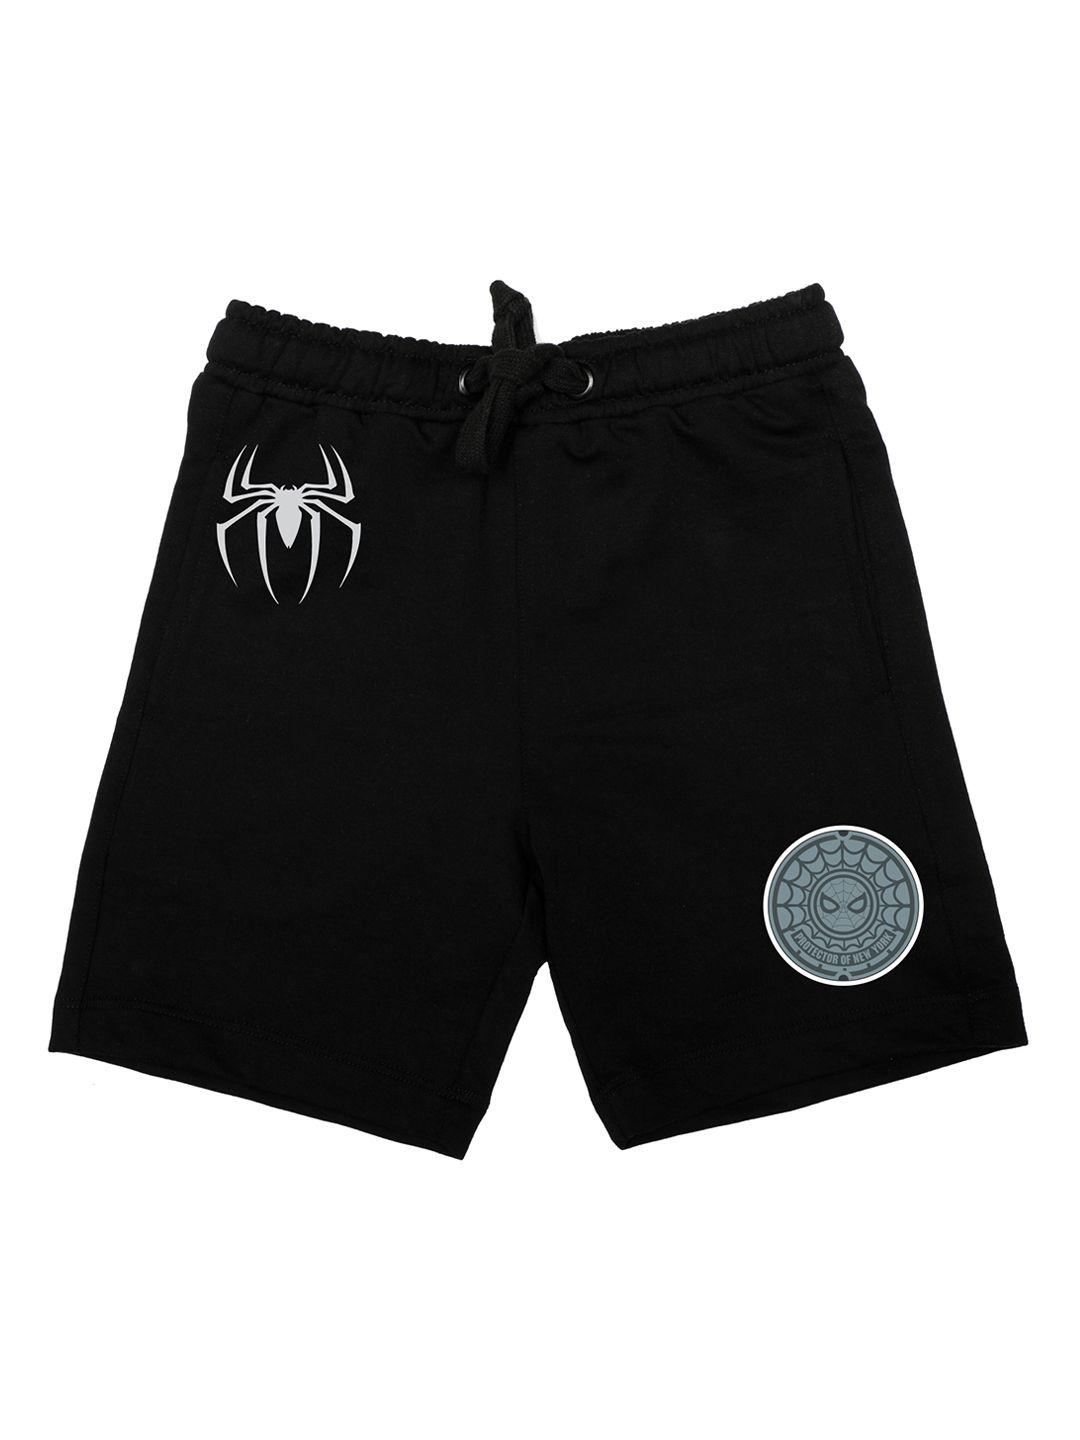 marvel by wear your mind boys black spiderman printed regular fit regular shorts